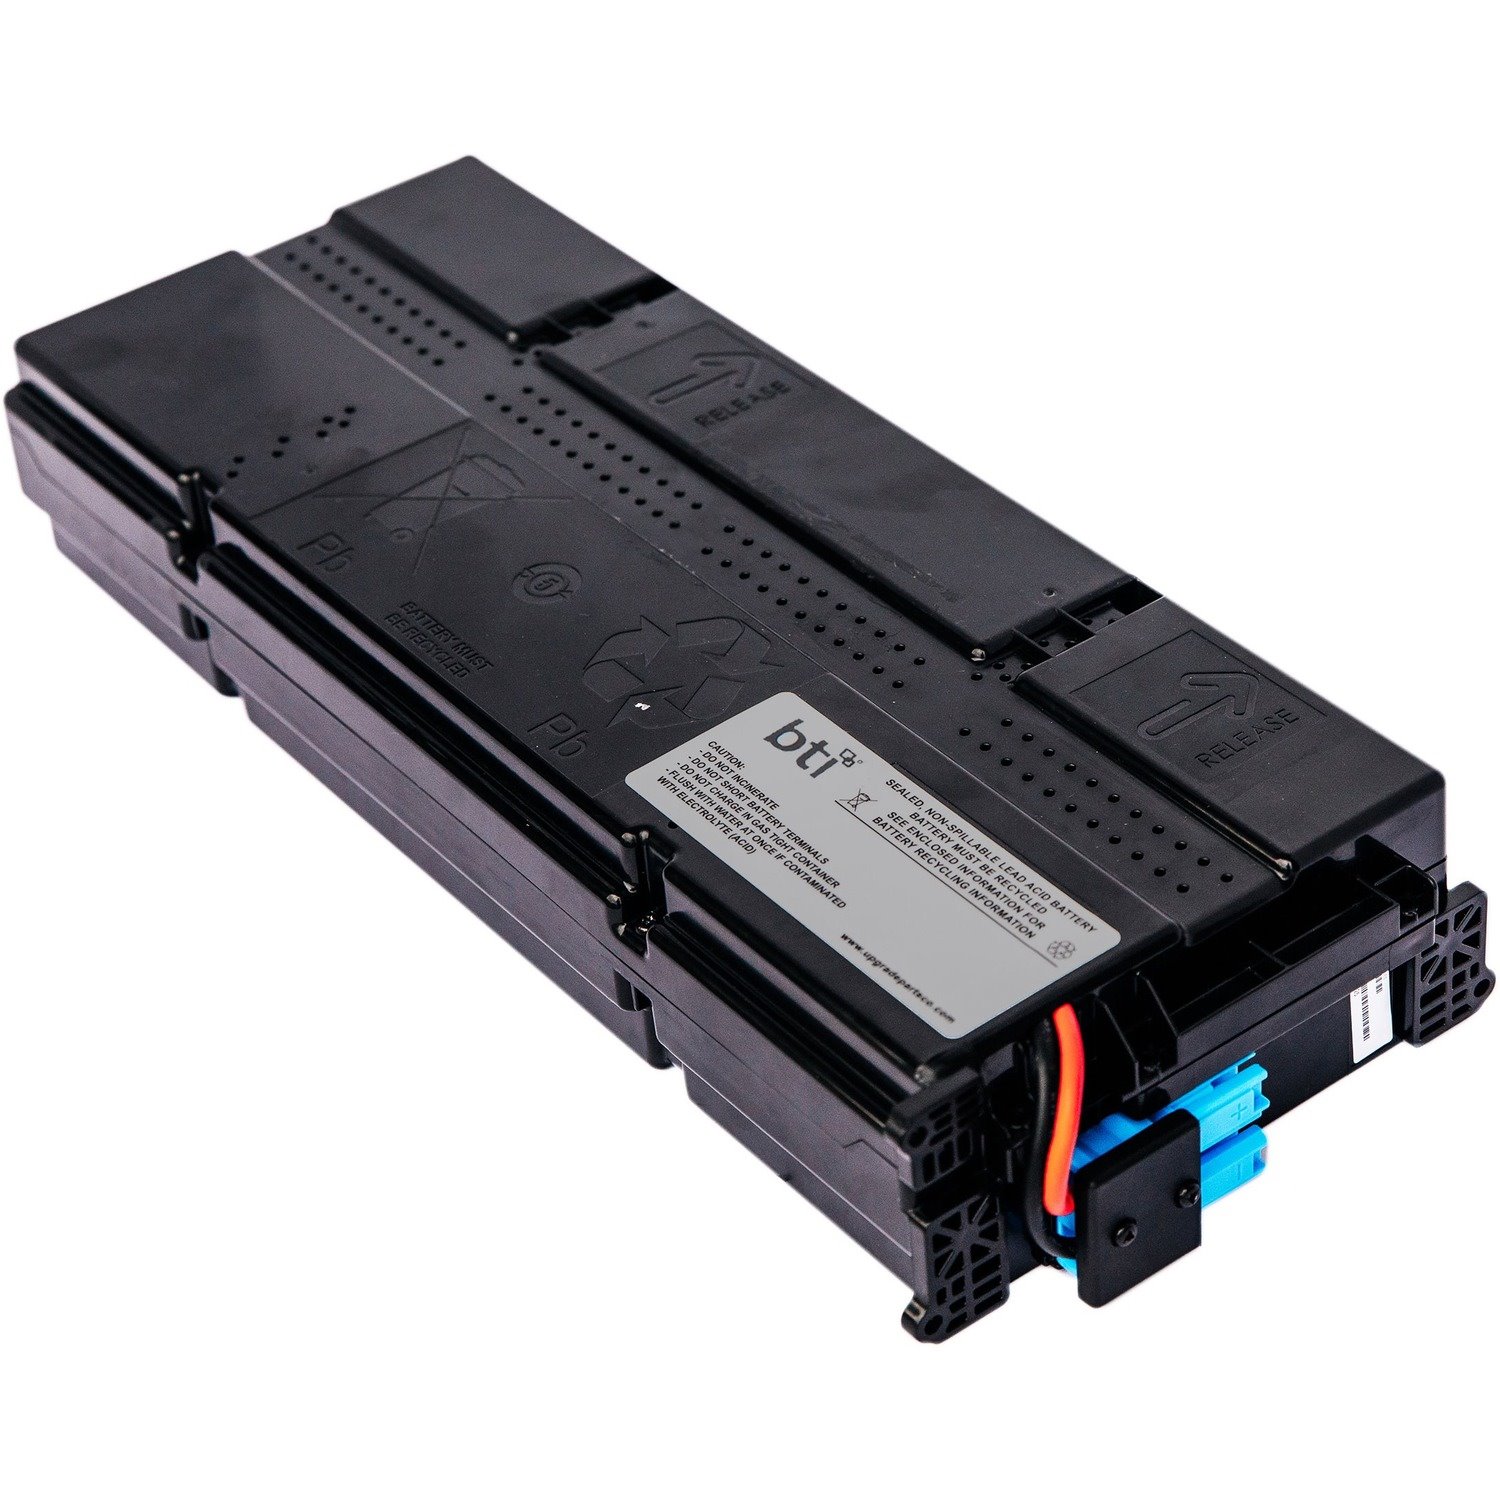 BTI APCRBC155 UPS Battery Pack